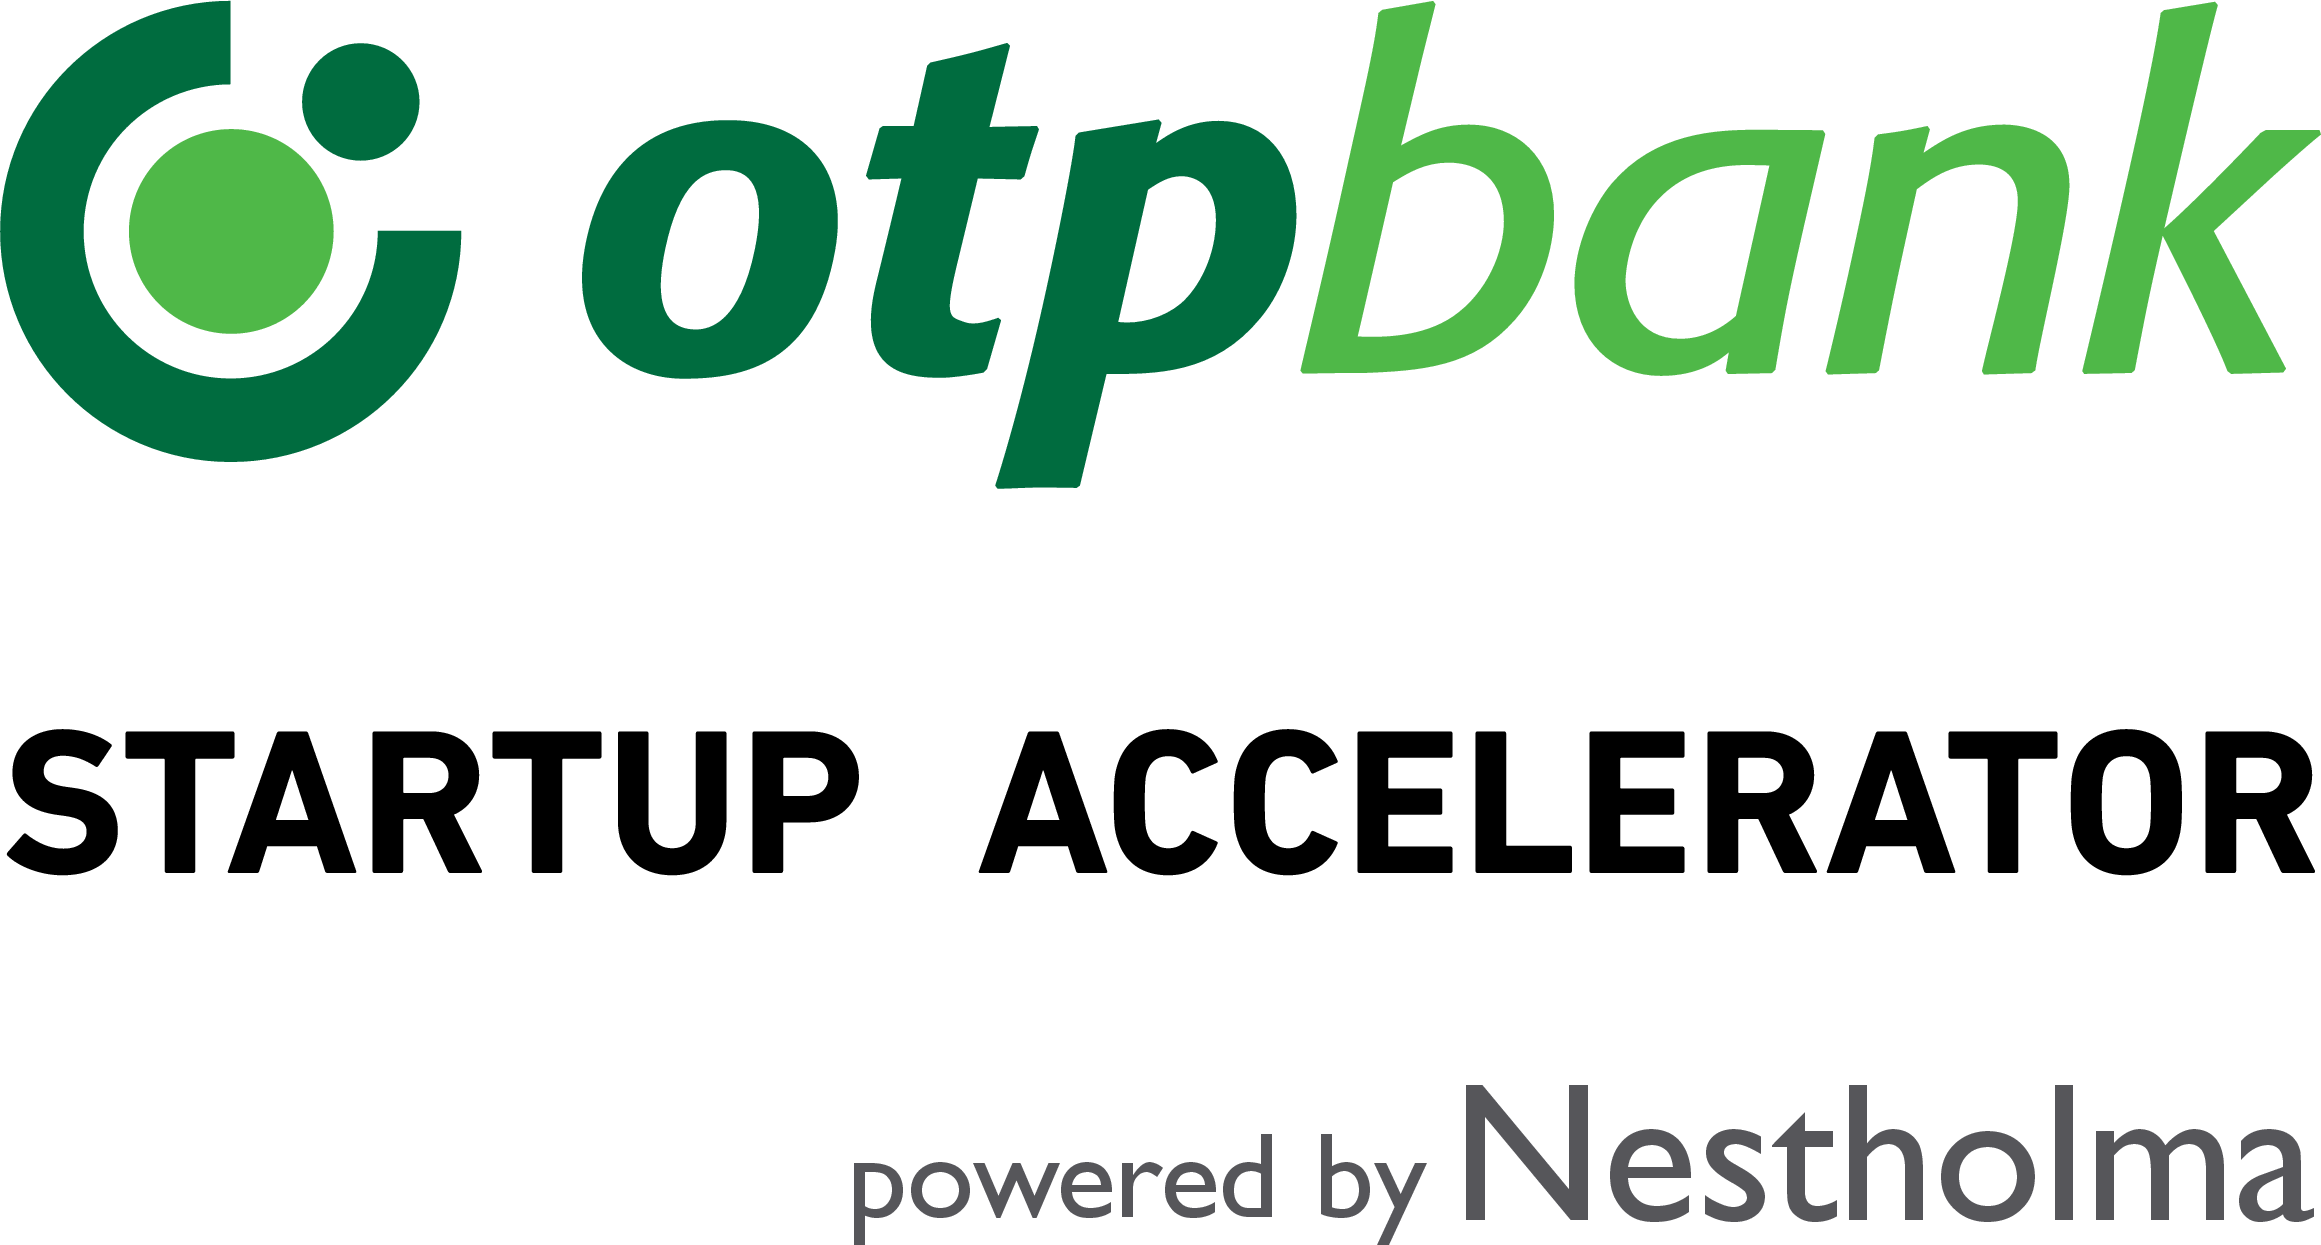 Link to OTP bank startup accelerator